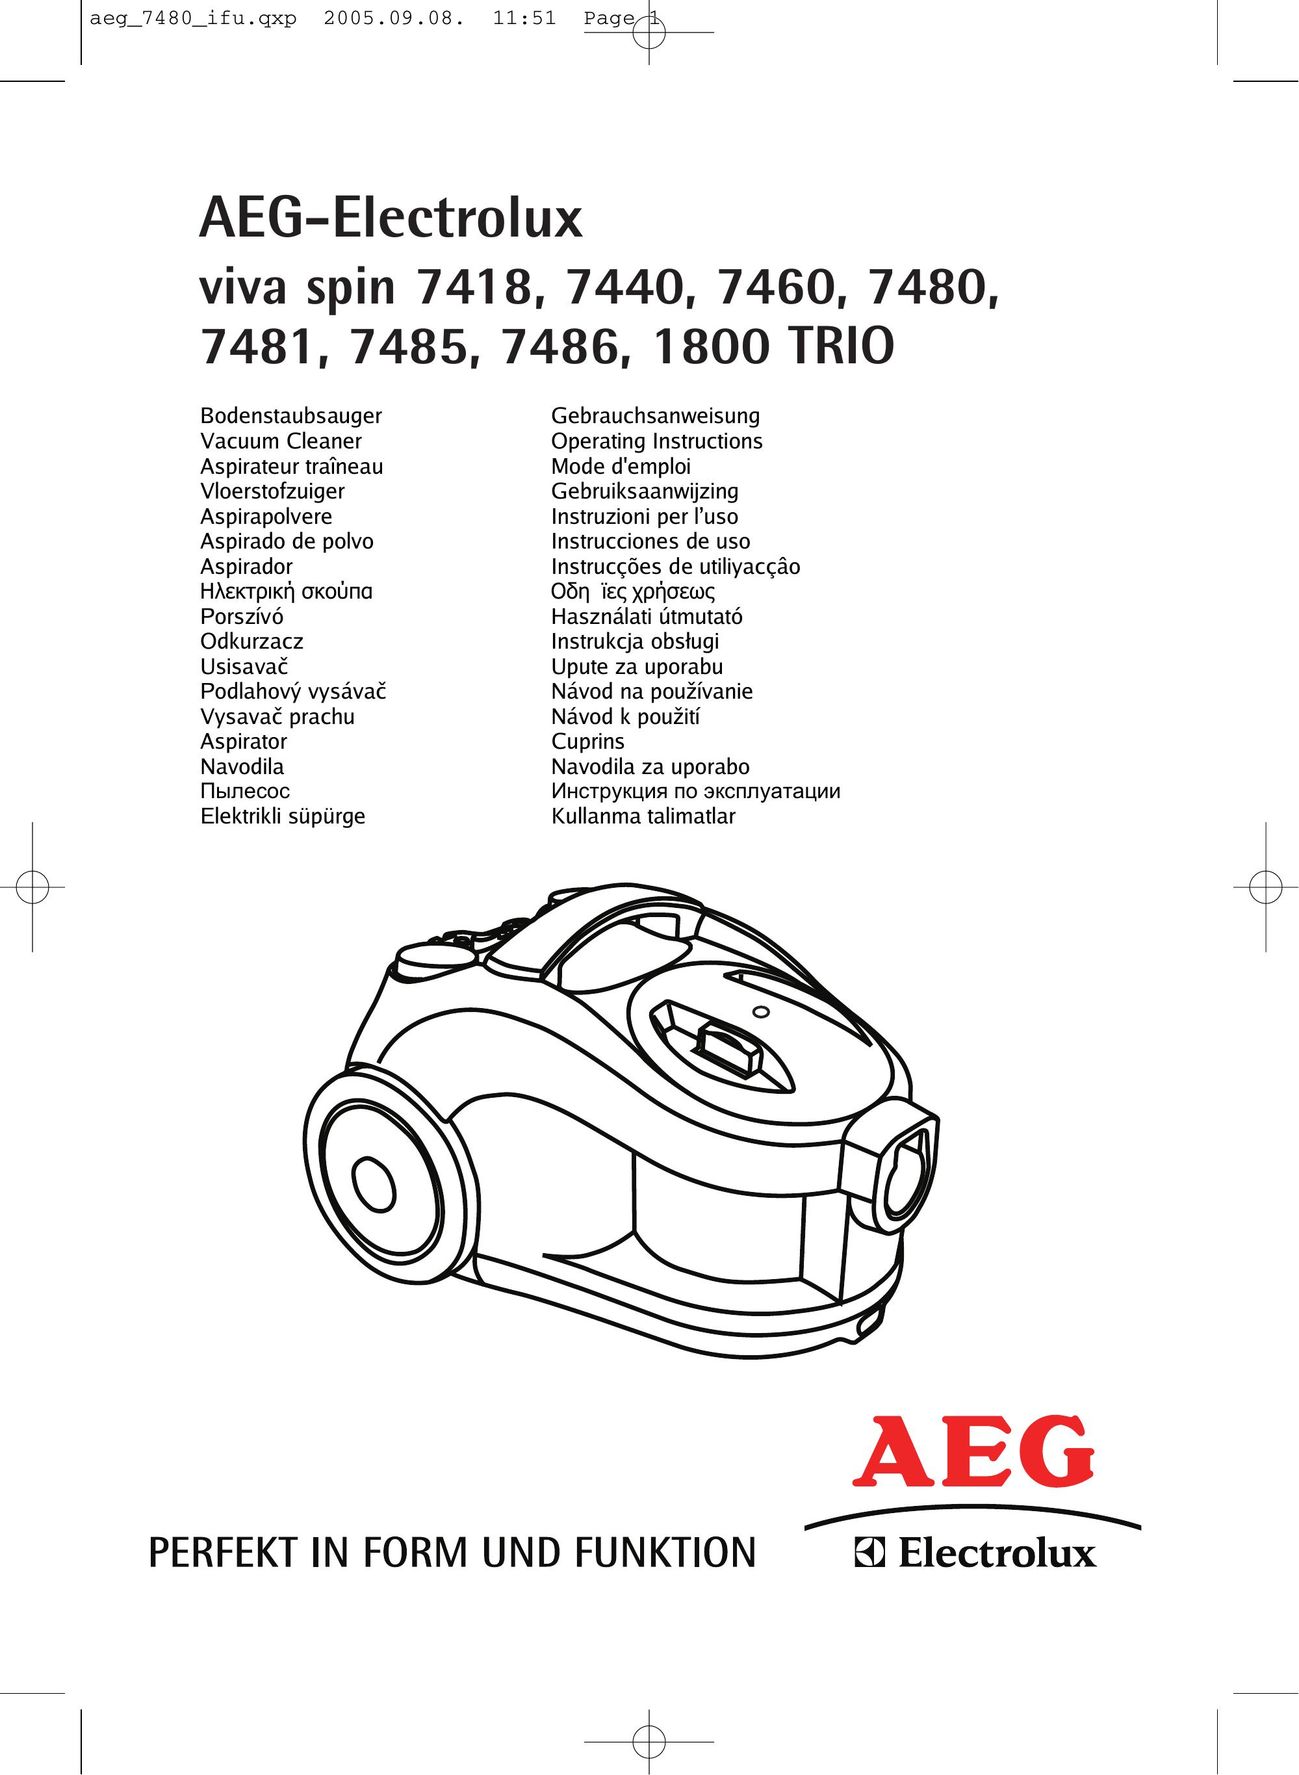 AEG 7480 Vacuum Cleaner User Manual